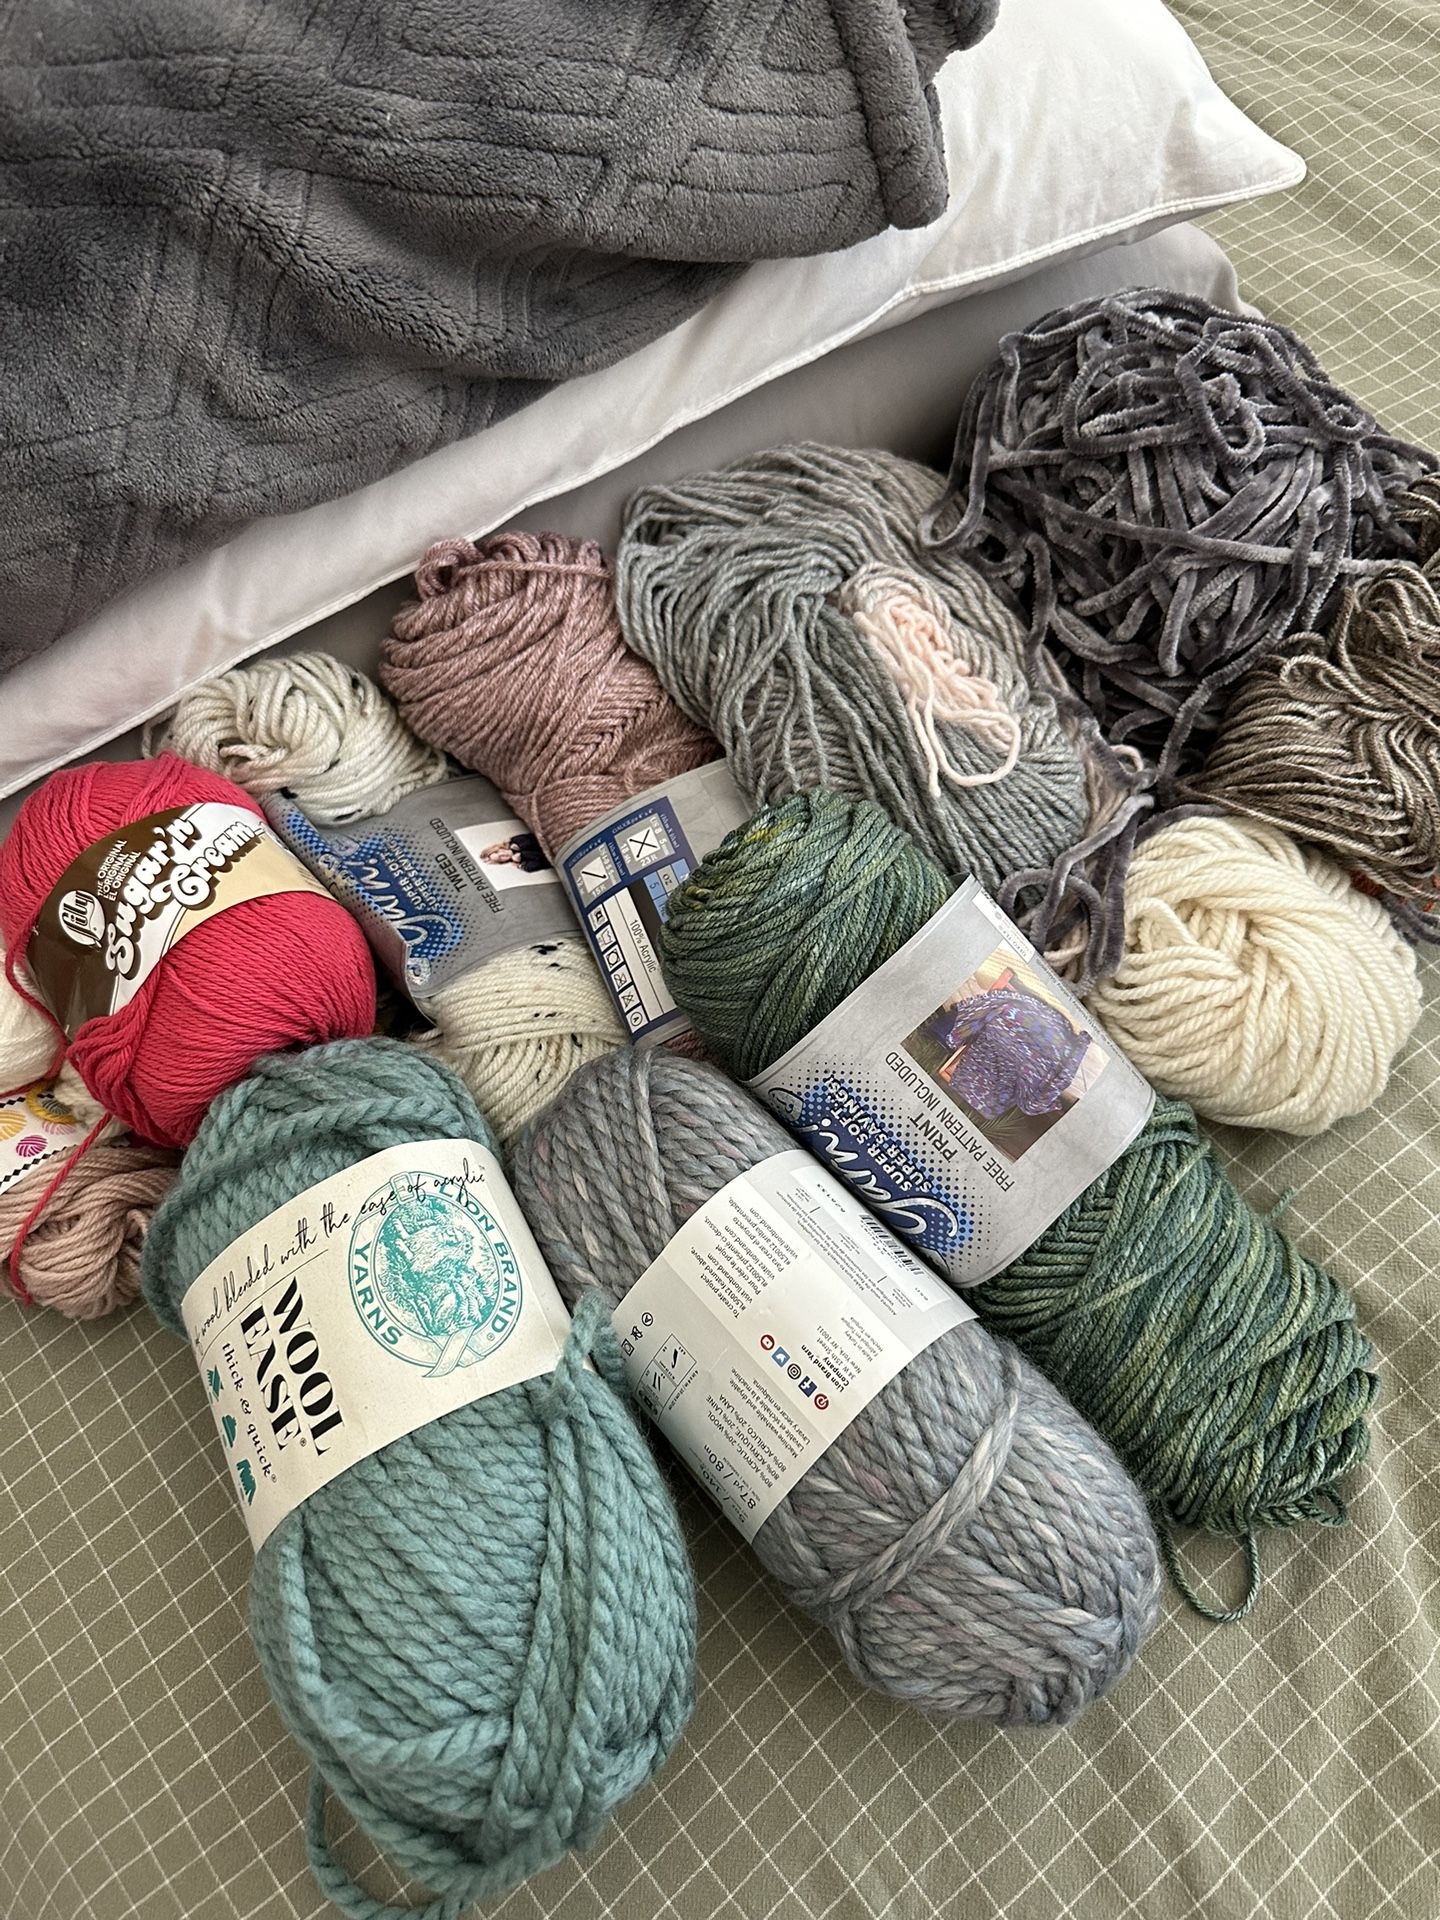 Acrylic and cotton yarn, knitting needles